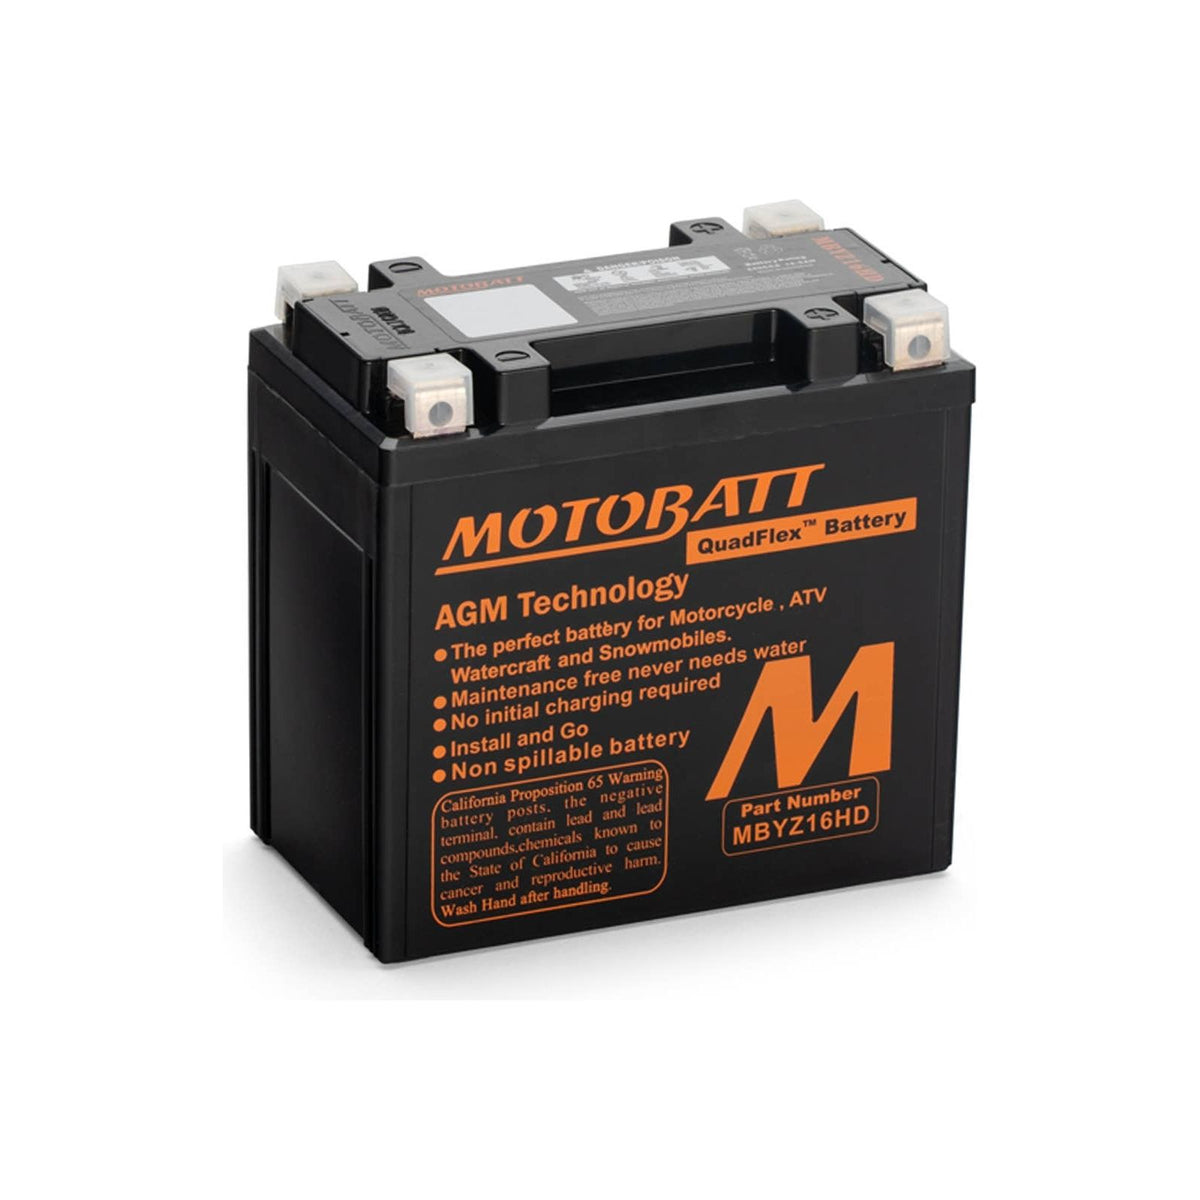 Honda Pioneer Motobatt Battery Replacement | SuperATV